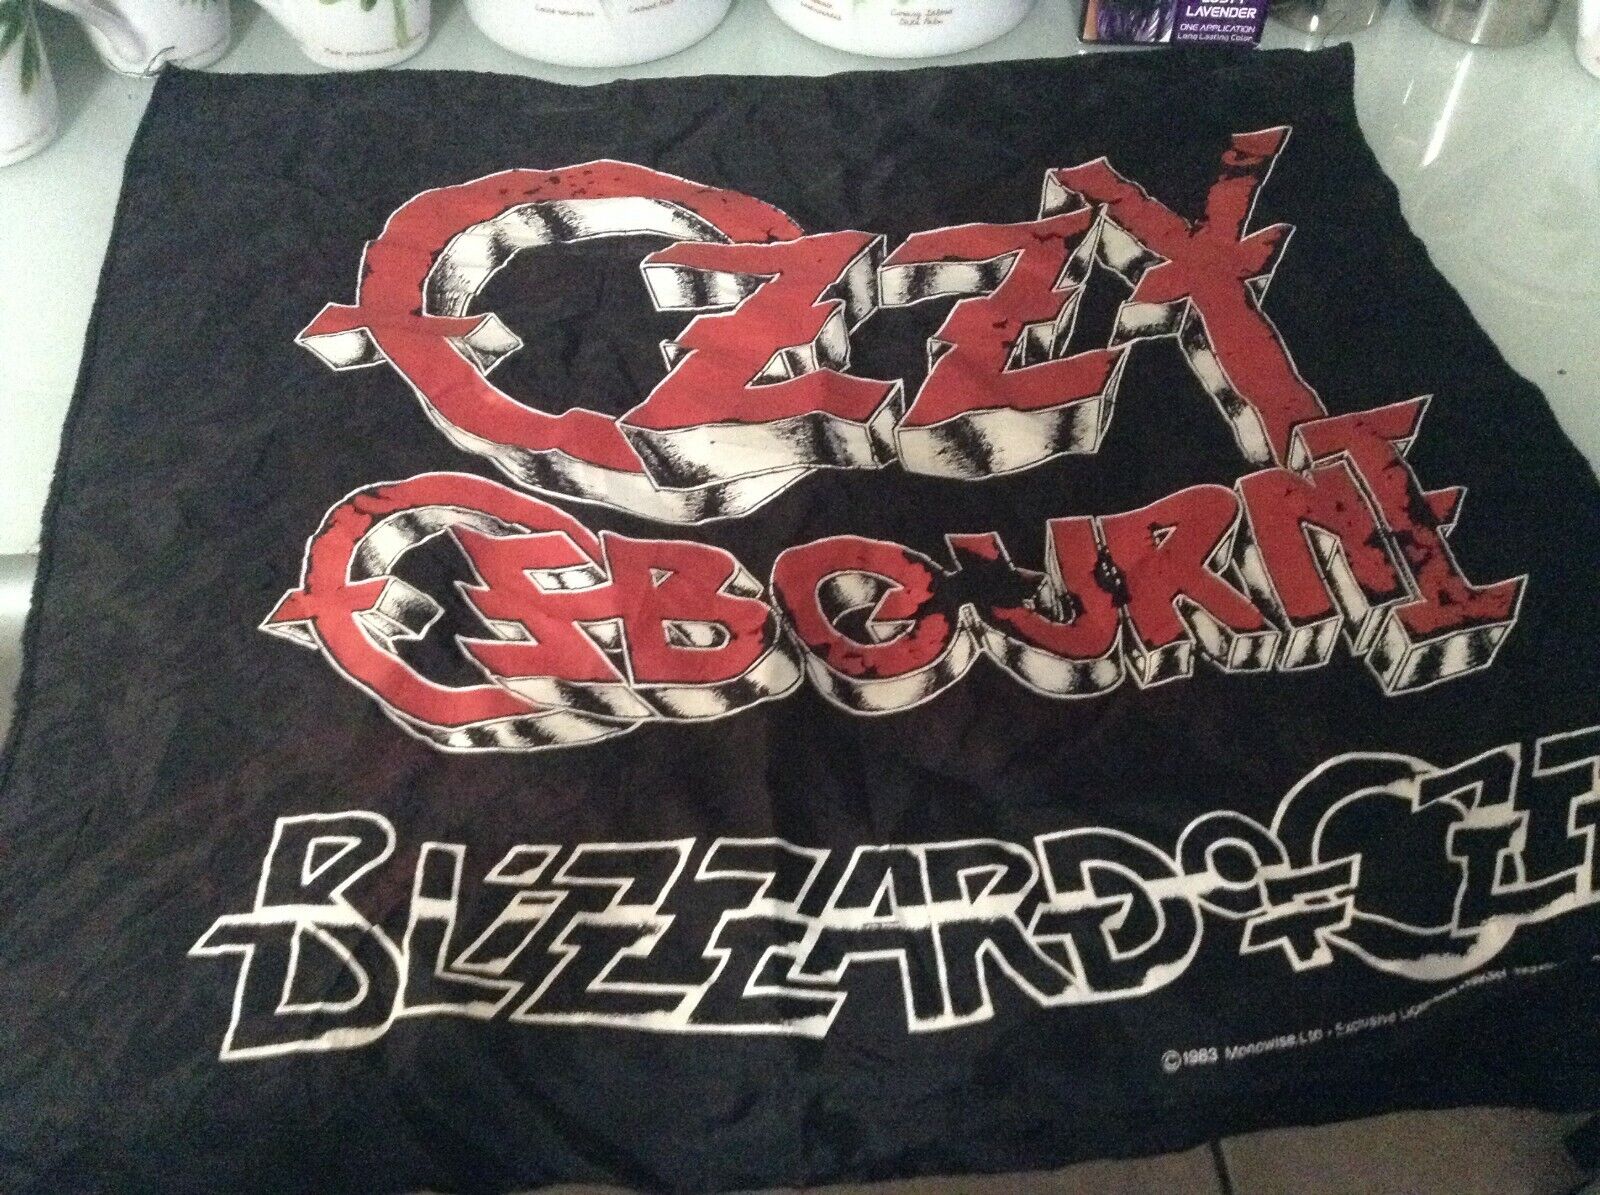 Ozzy Osbourne 1983 Vintage Silk Wall Banner 22 X 22 Original Blizzard Of Ozz Wow